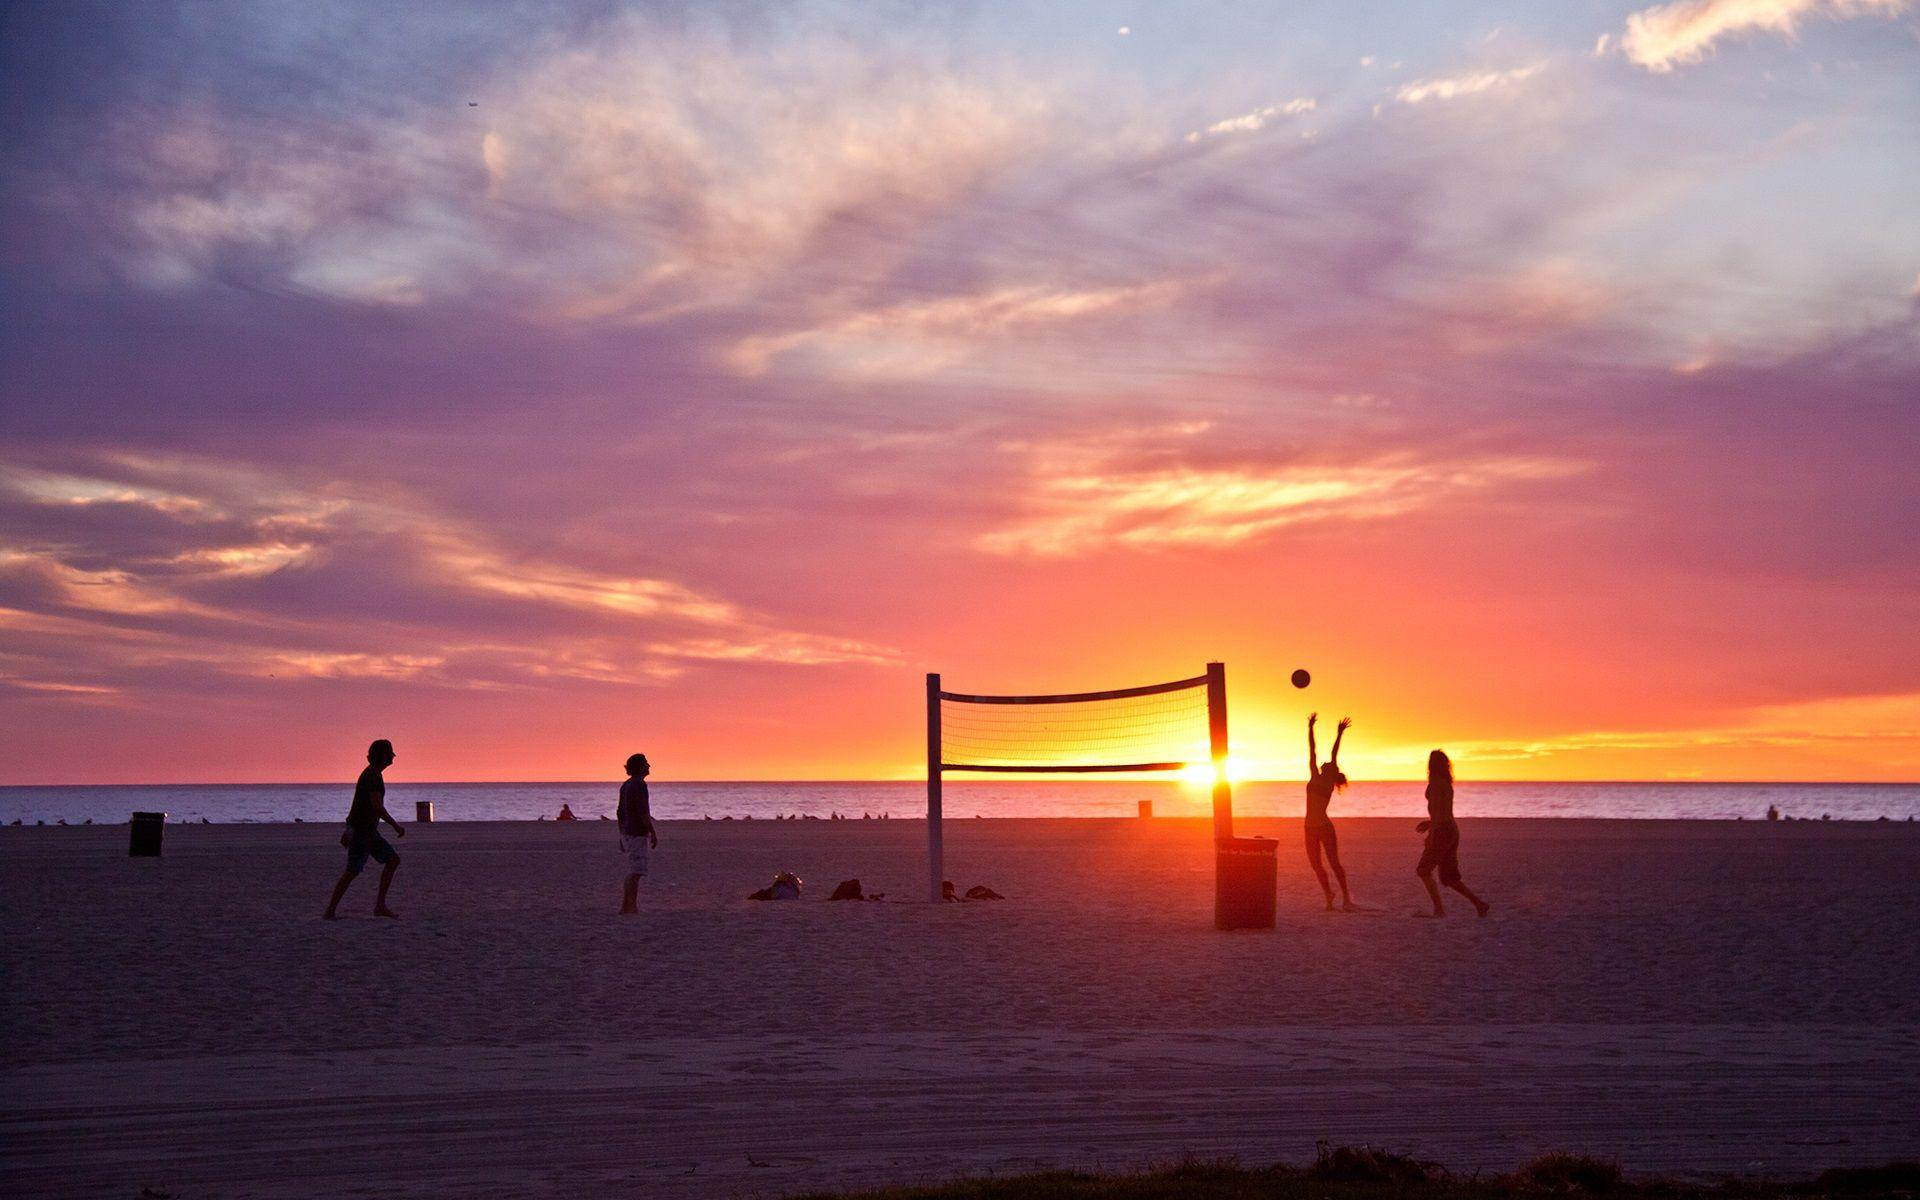 Venice beach, Los Angeles, California, USA, sunset, volleyball